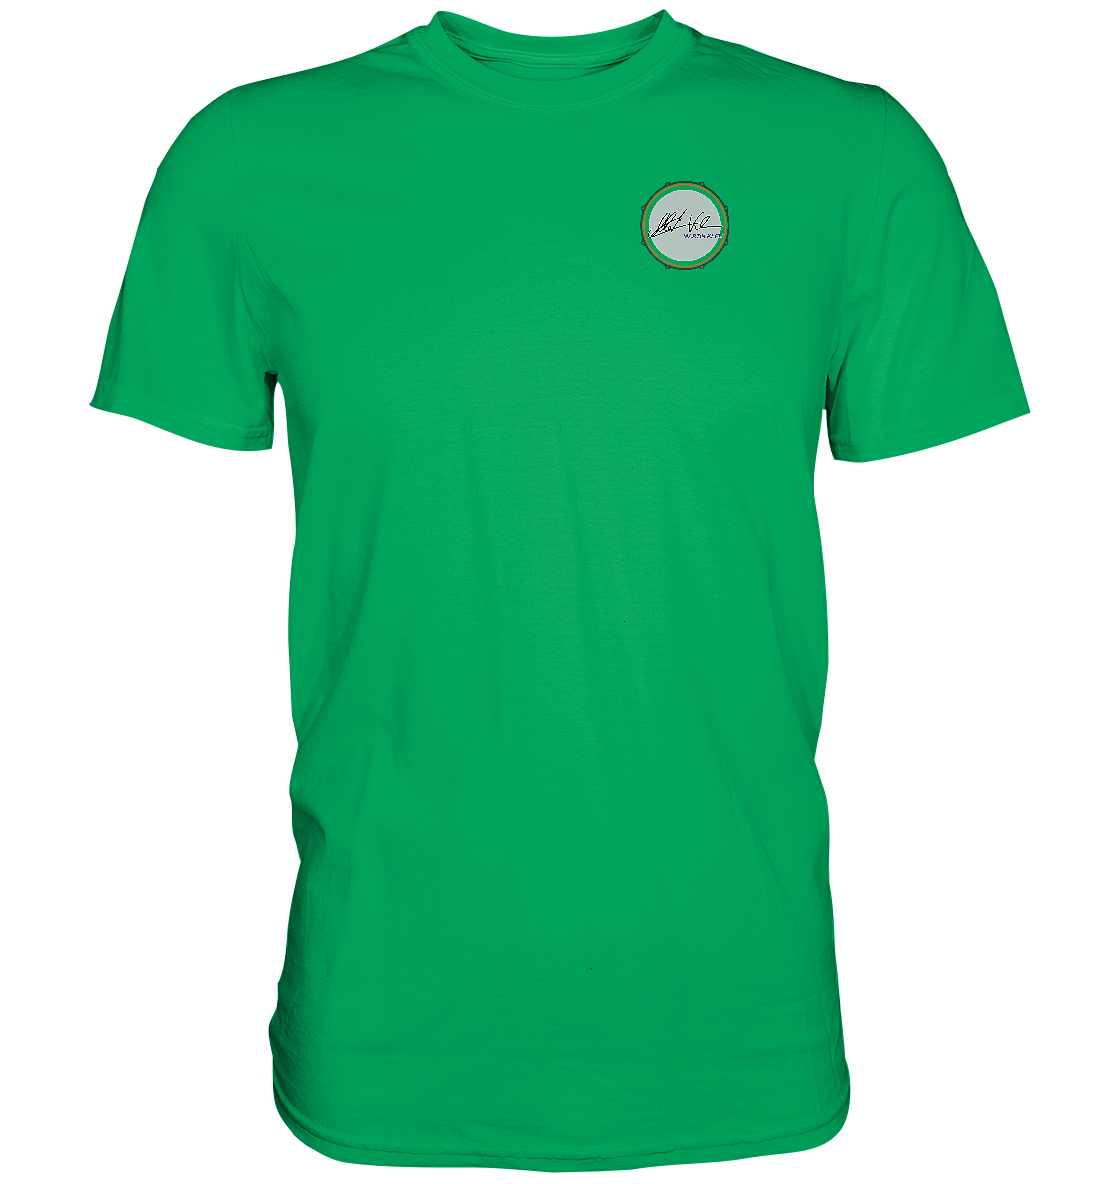 founder - unisex shirt | various colors